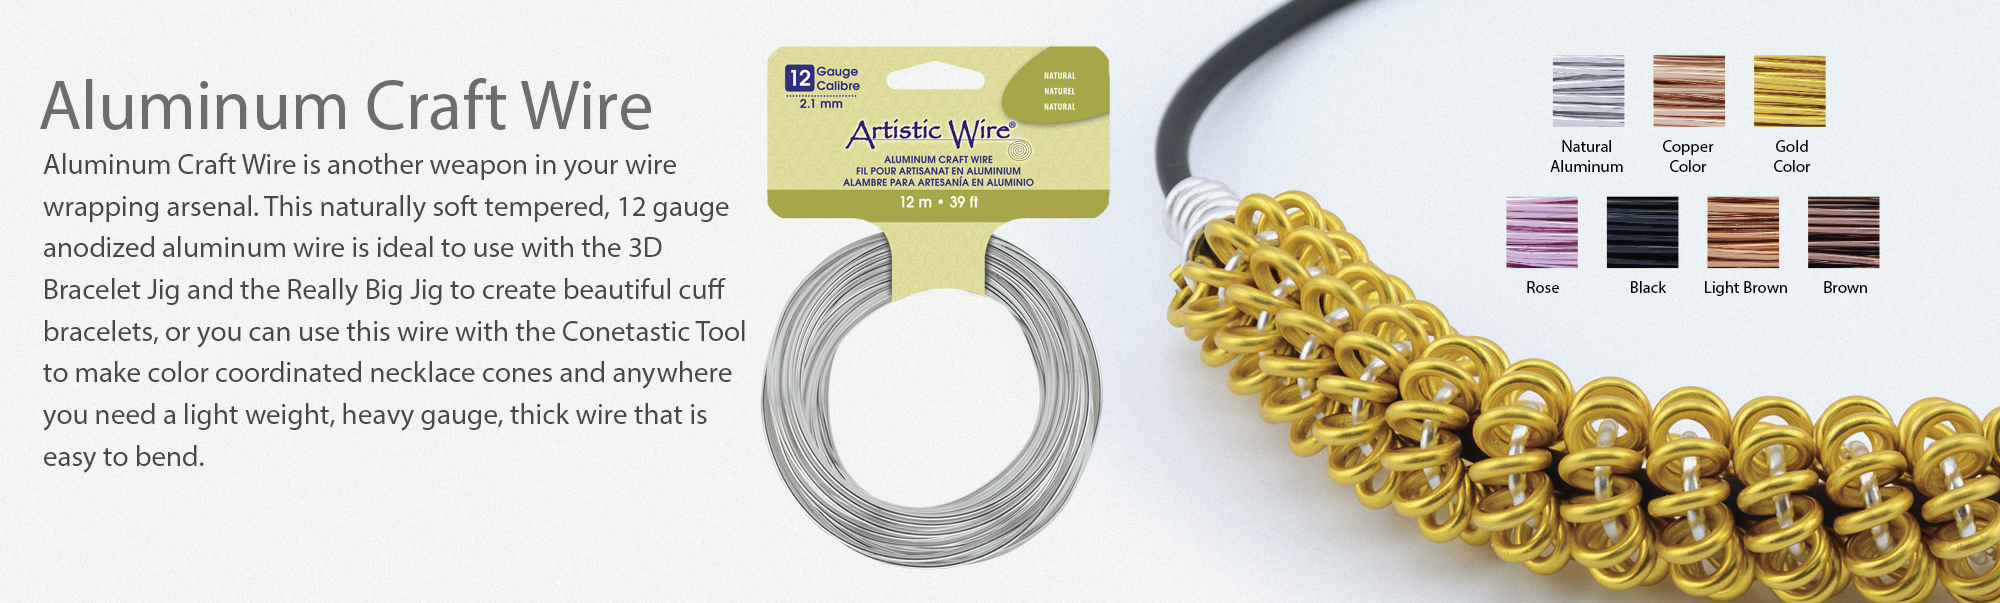 Craft Medley Metallic Beading & Jewelry Wire 28 Gauge 32'-Black